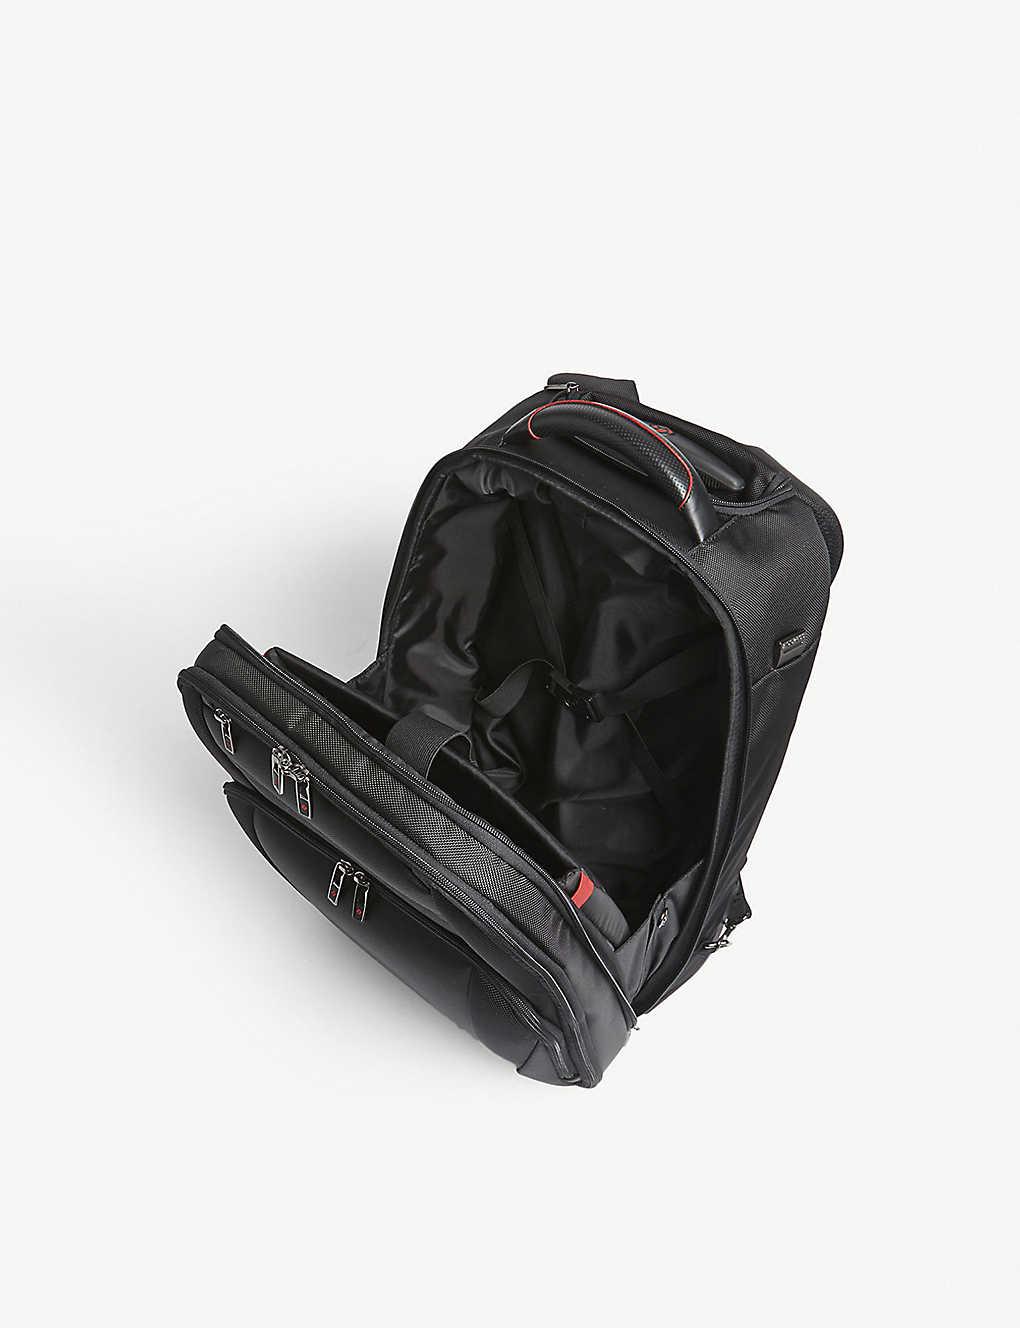 Samsonite Pro-dlx 5 17.3" Laptop Backpack in Black | Lyst